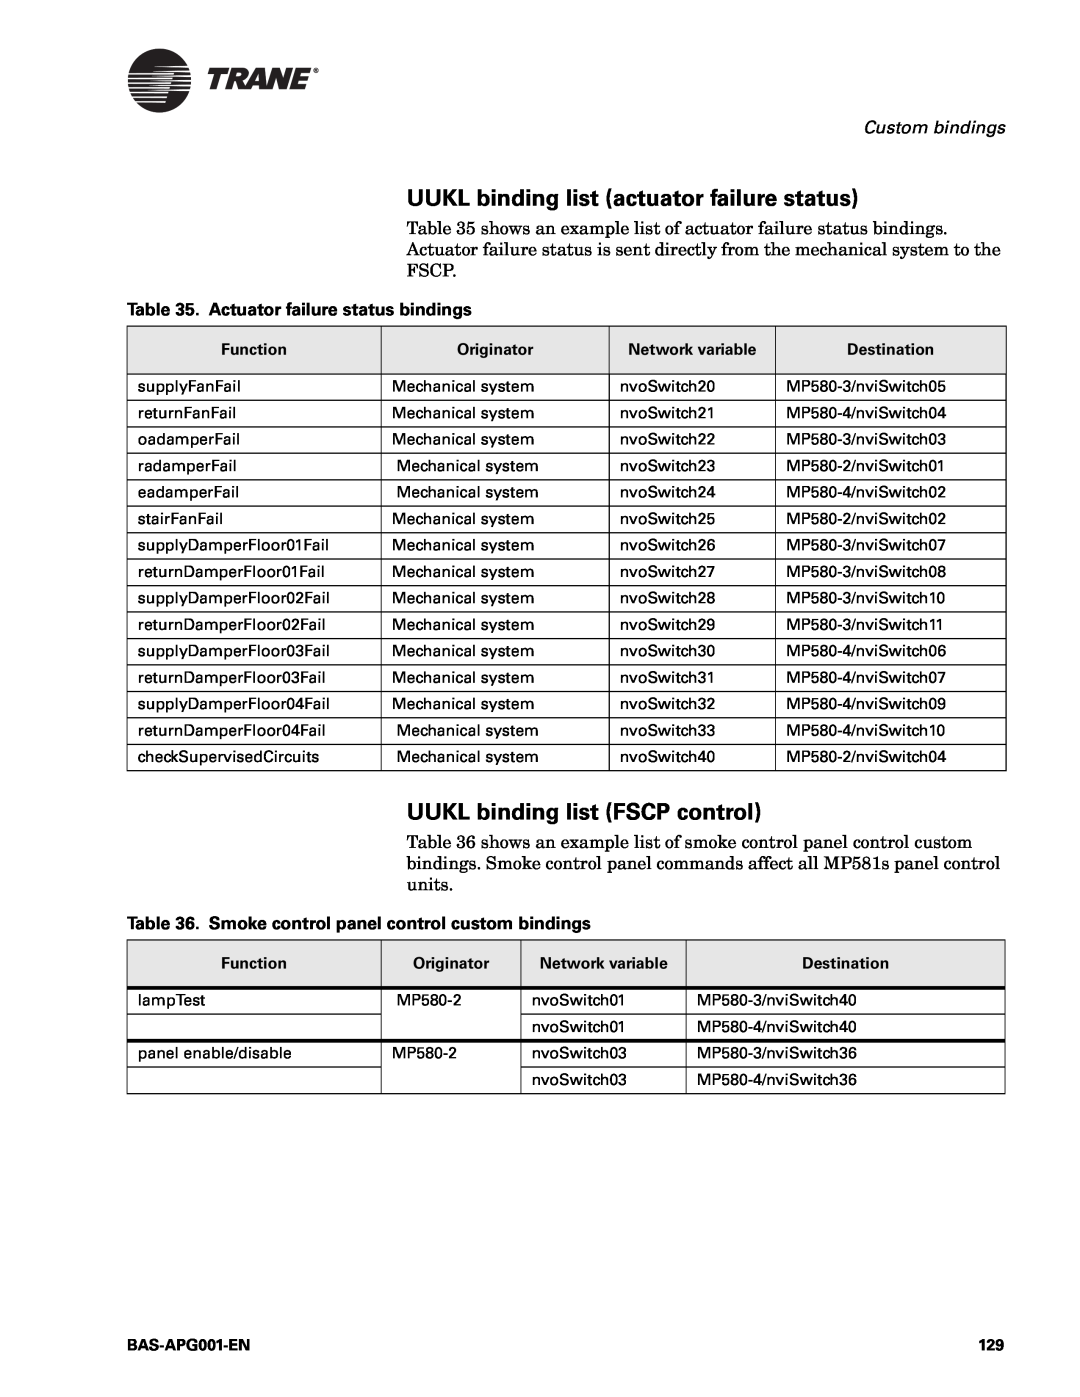 Trane Engineered Smoke Control System for Tracer Summit manual UUKL binding list actuator failure status, Custom bindings 